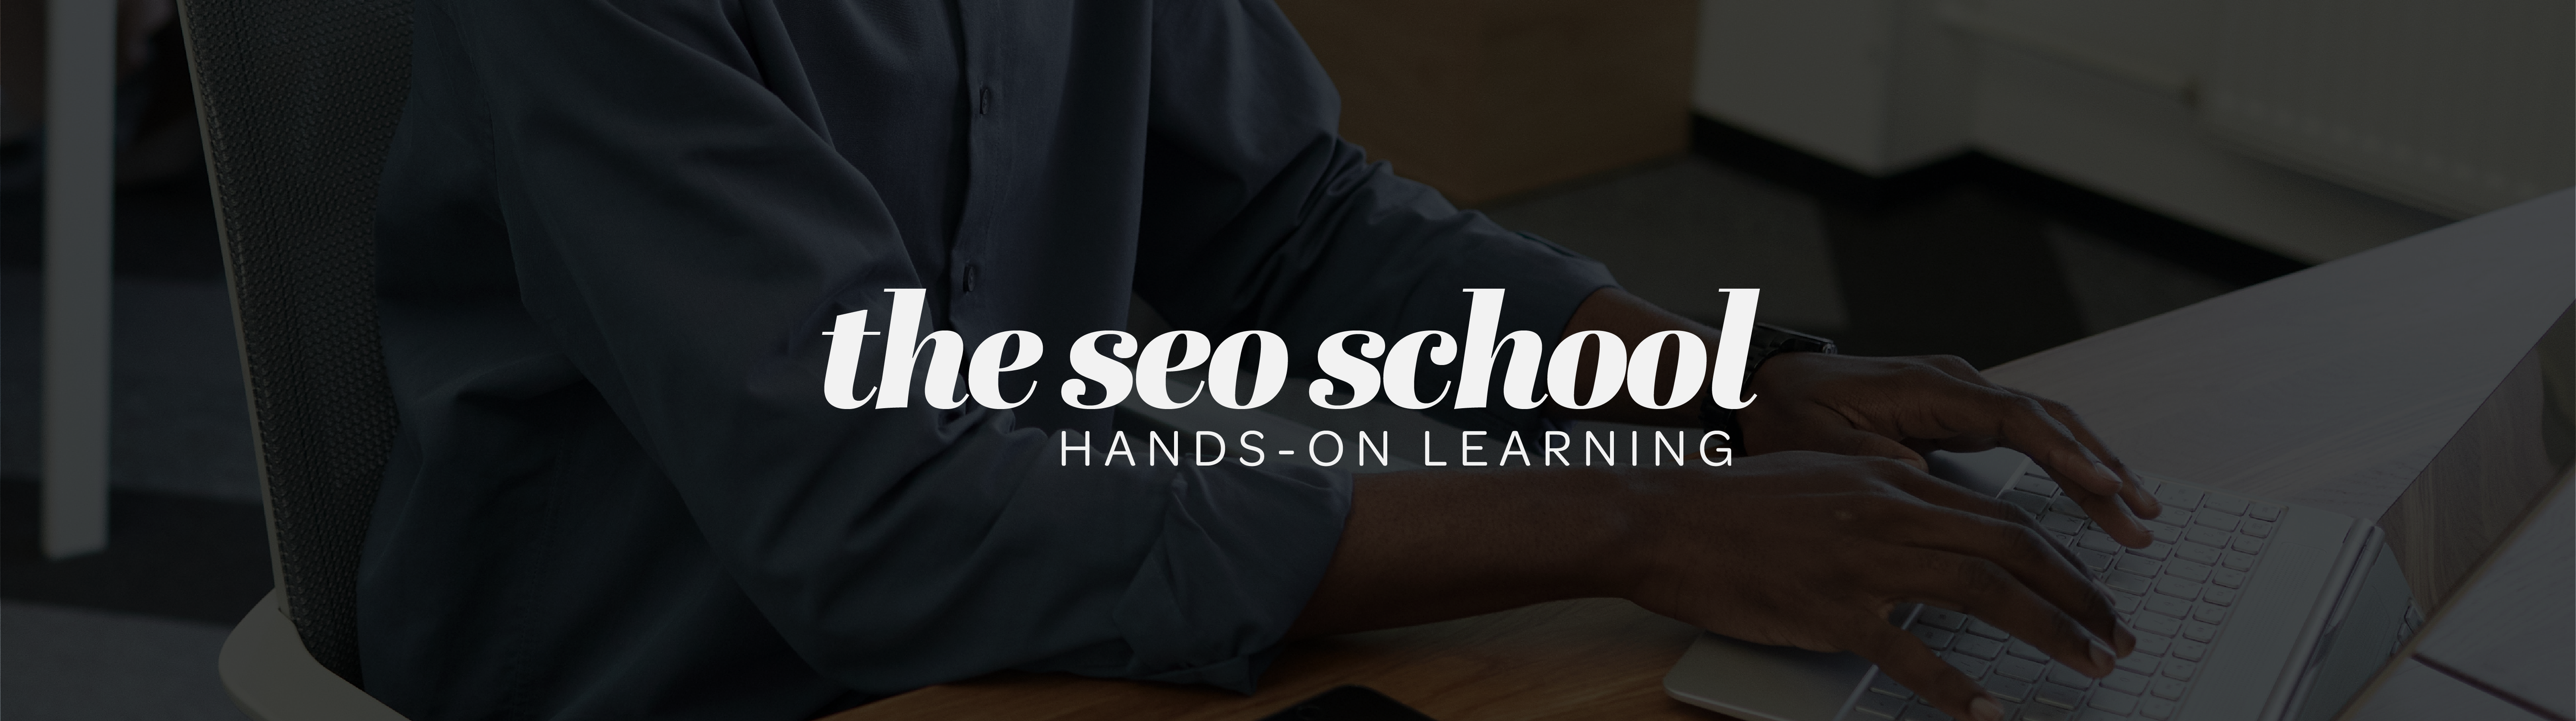 the seo school learn search engine optimization get paid learning work study program digital marketing online